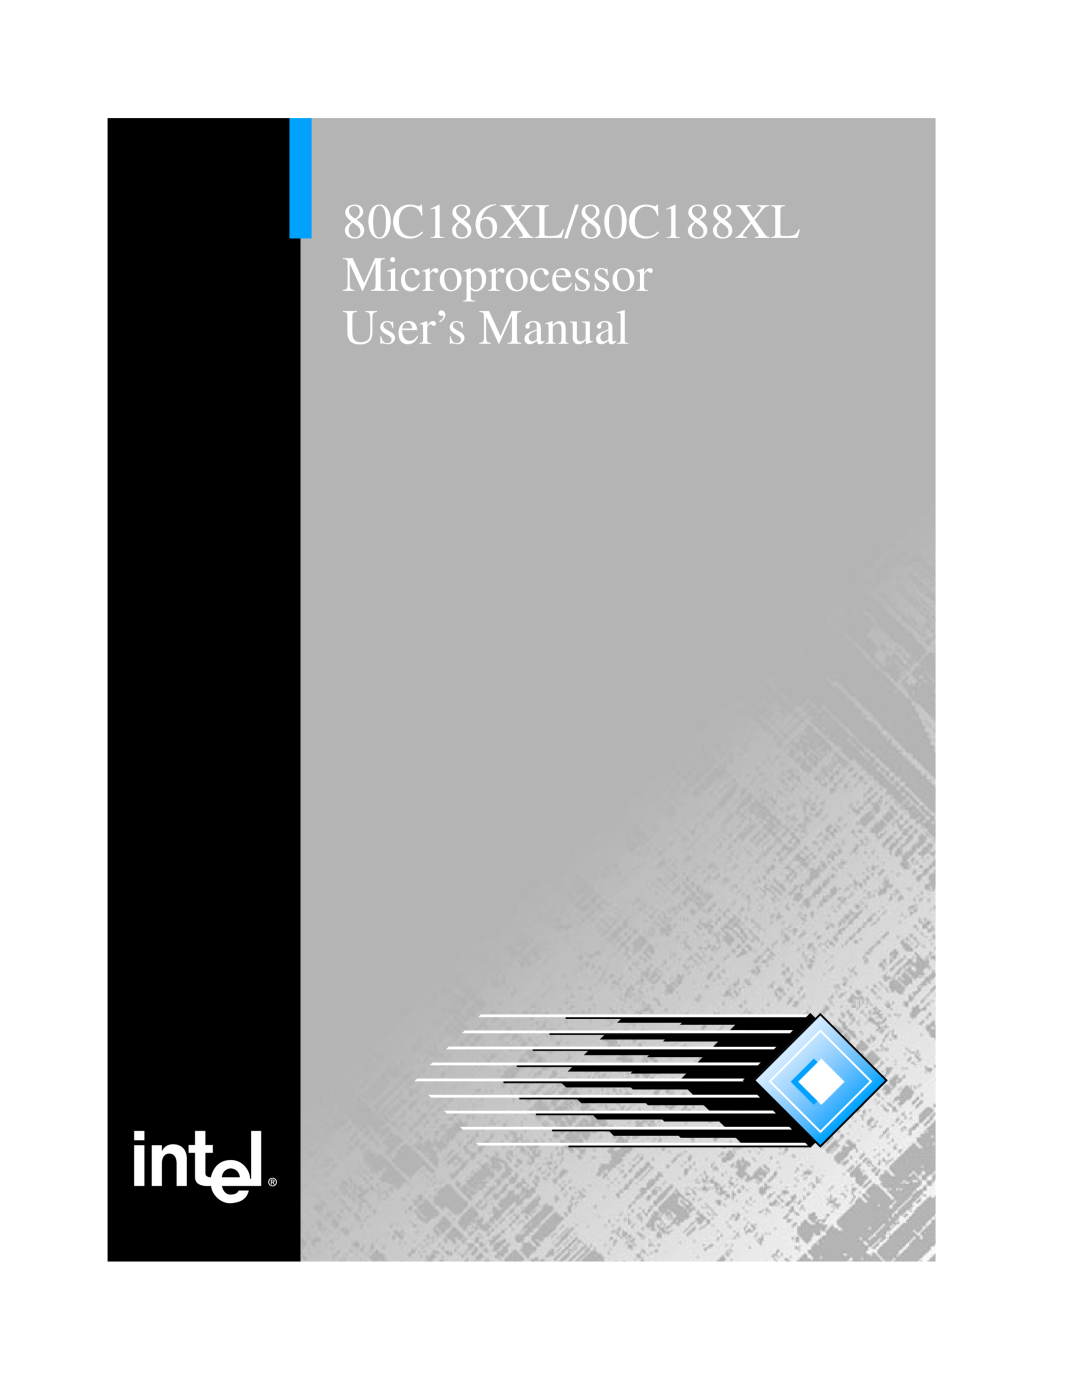 Intel user manual 80C186XL/80C188XL Microprocessor User’s Manual 